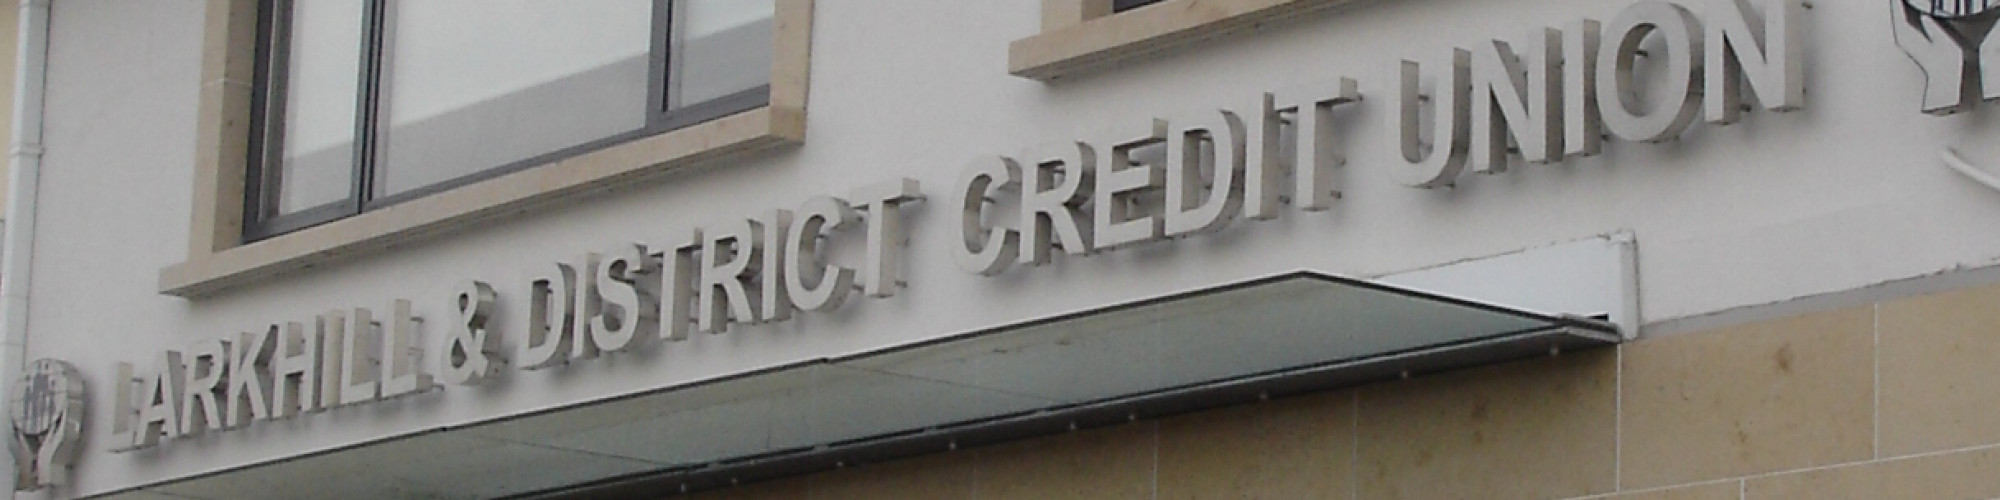 Larkhill & District Credit Union Limited